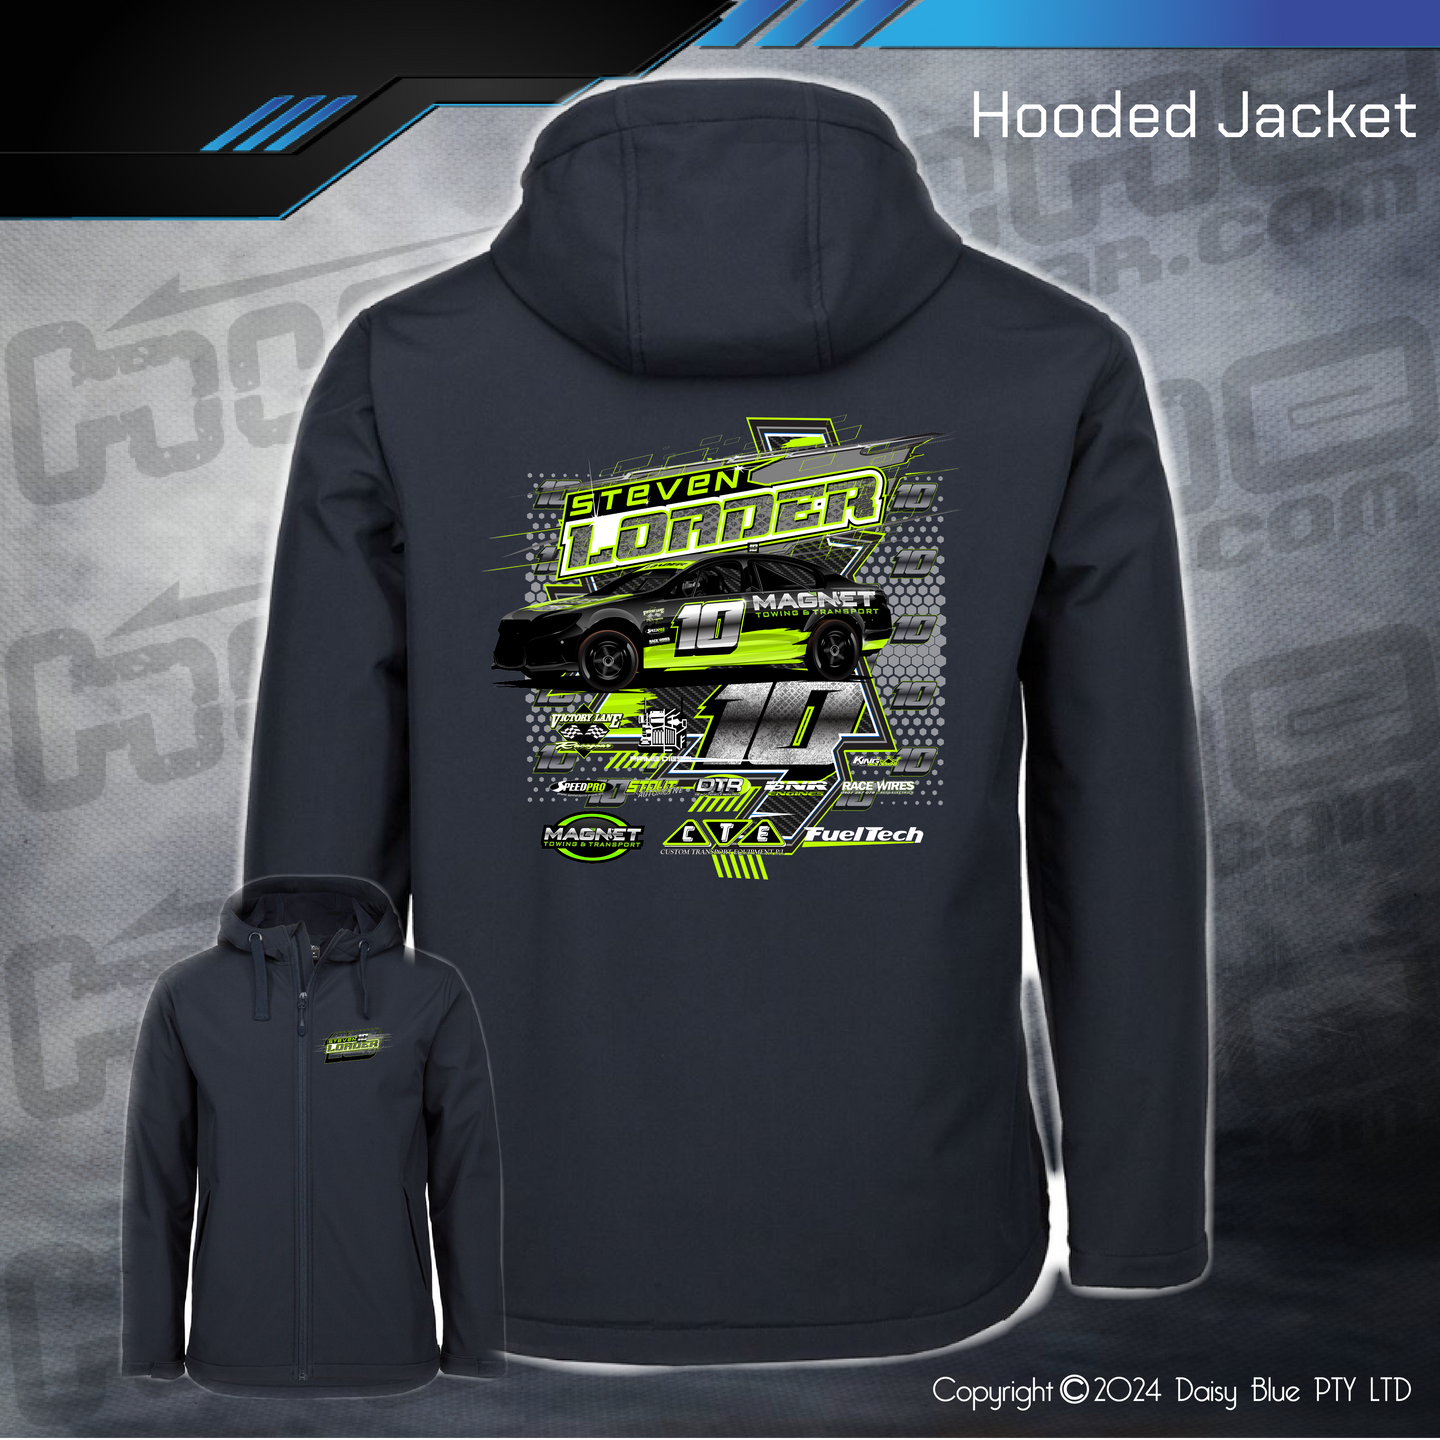 Hooded Jacket - Steve Loader Sports Sedan